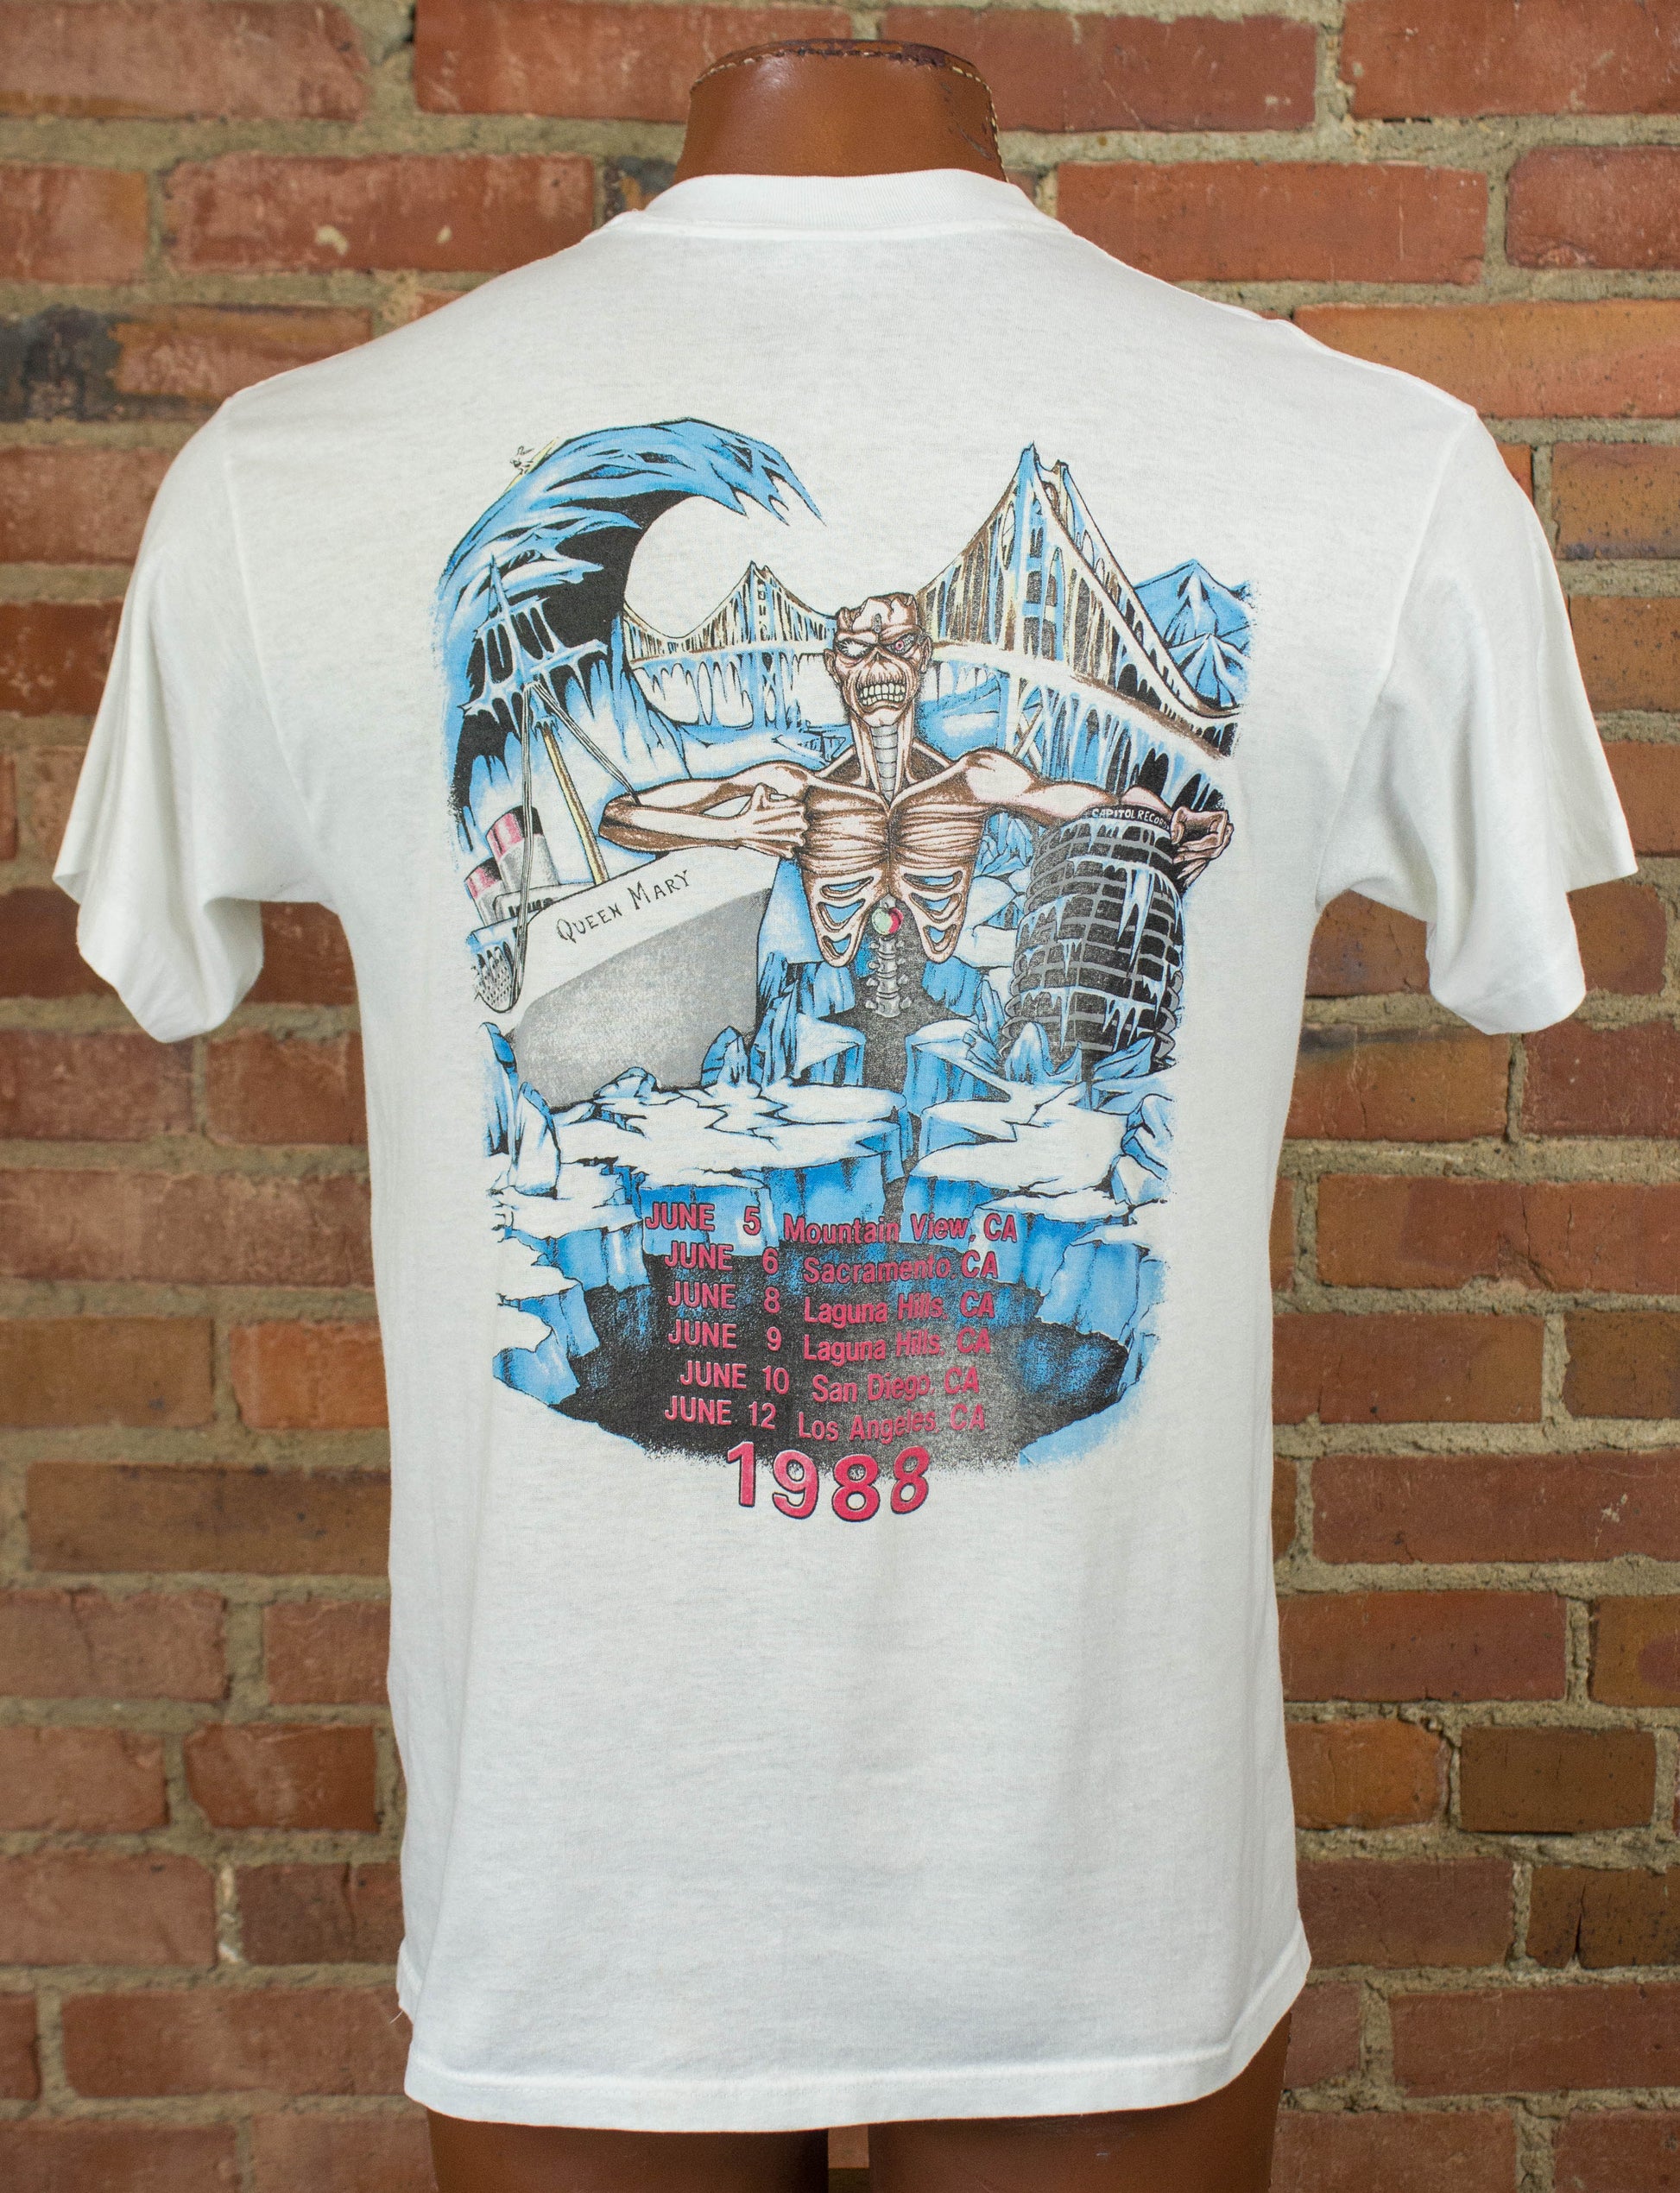 Vintage Iron Maiden 1988 Seventh Son of a Seventh Son California Tour White Concert T Shirt Unisex Medium-Large